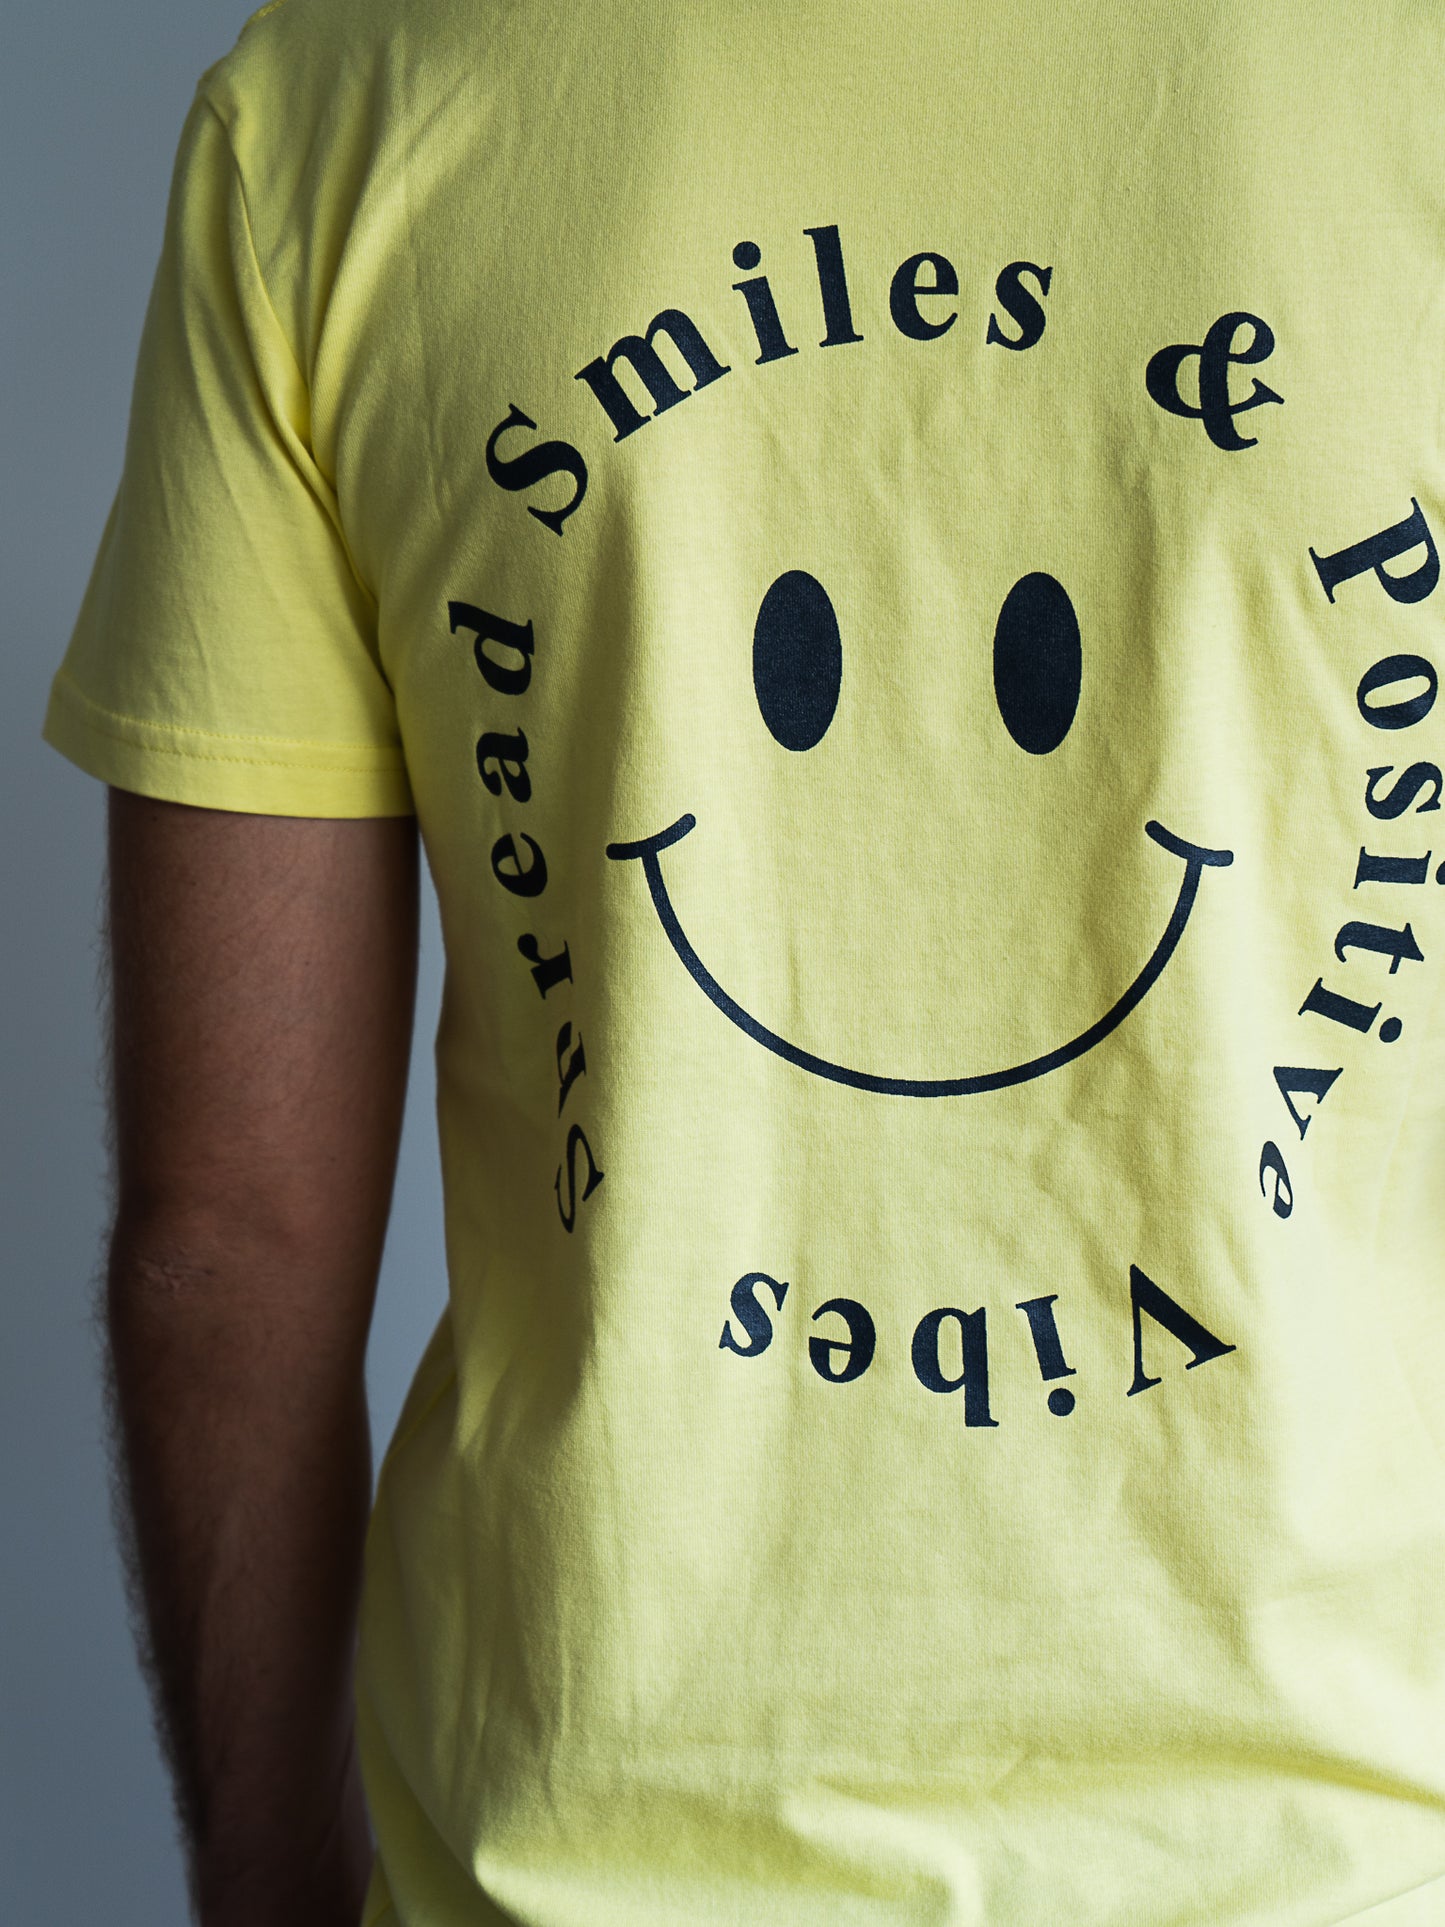 T-shirt "Smile" - Archivio